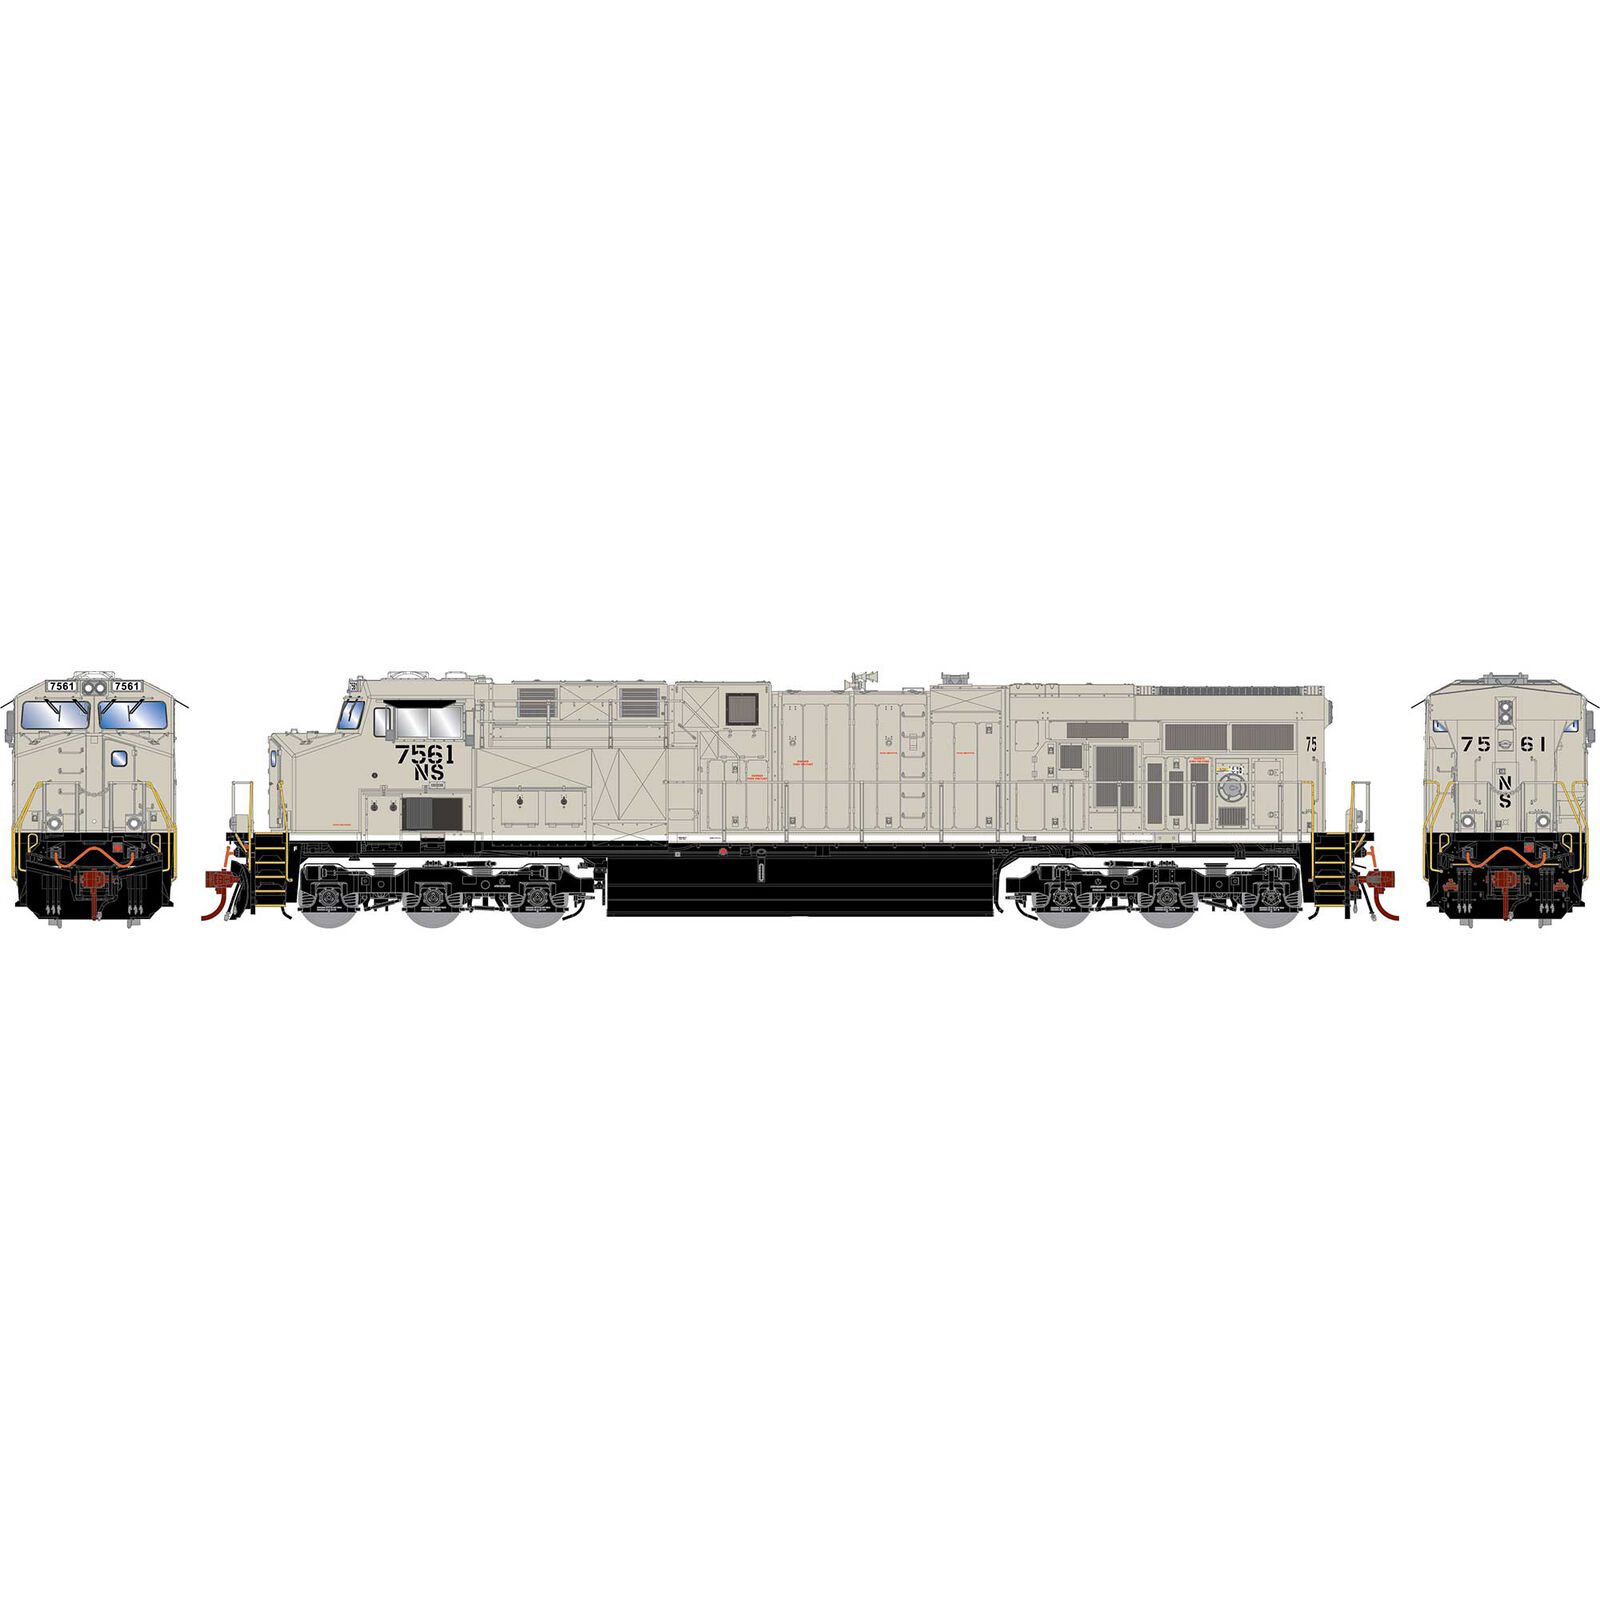 HO ES44DC Locomotive with DCC & Sound, NS, Primer #7561